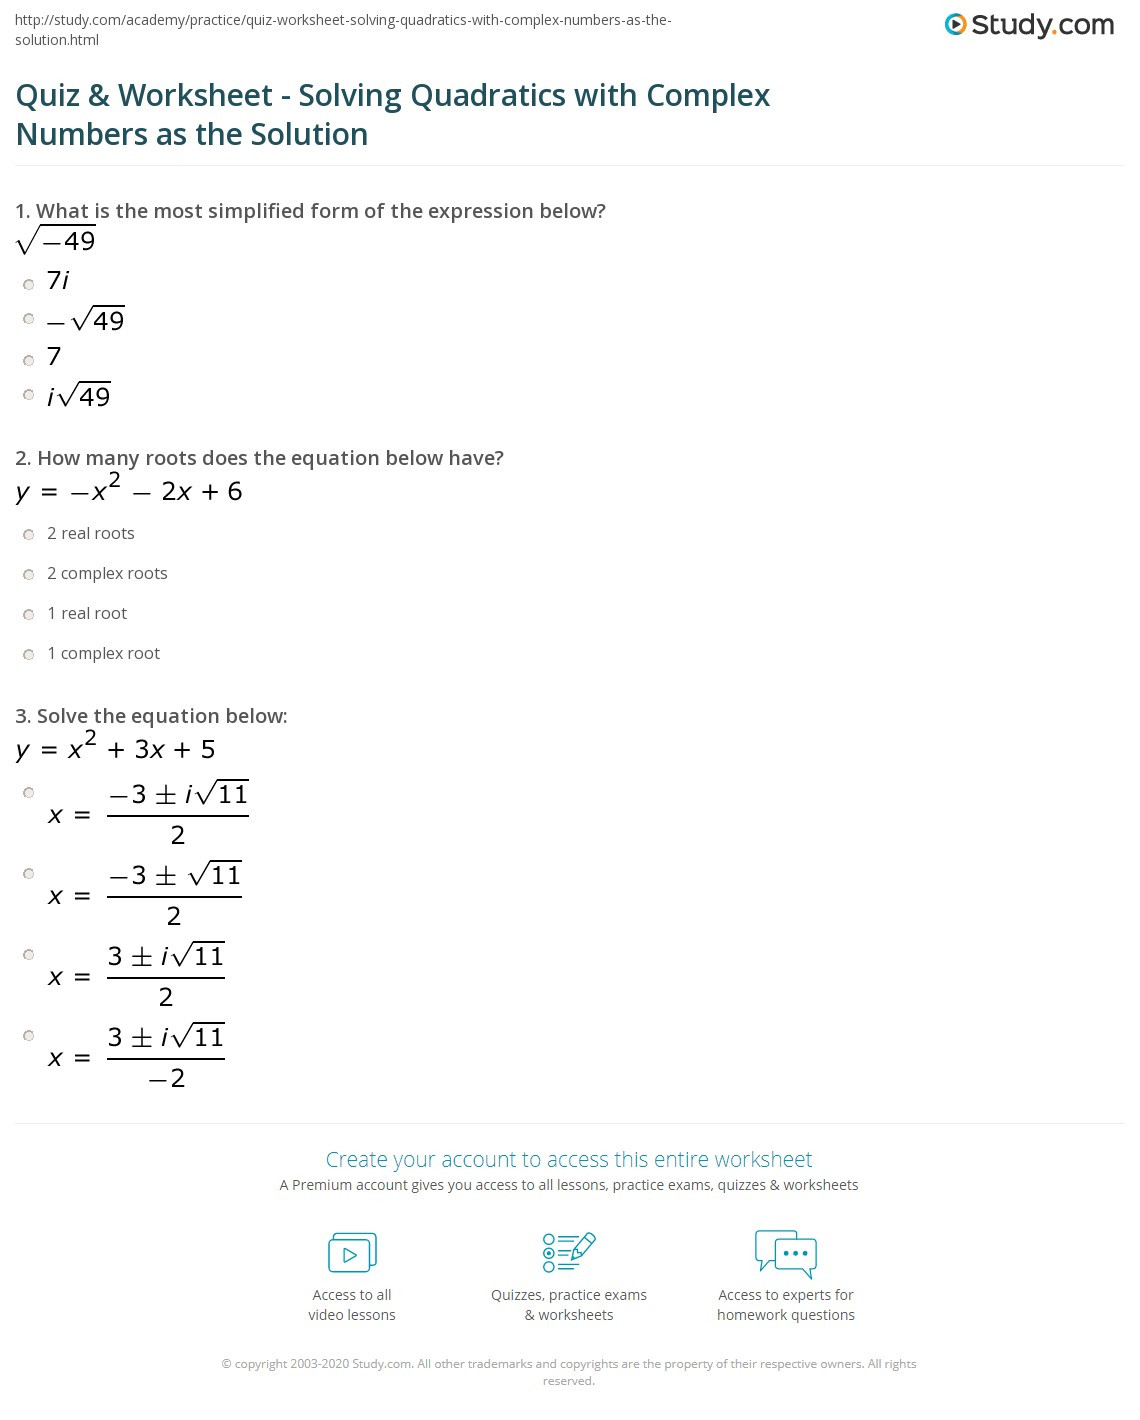 Multiplying Complex Numbers Worksheet Quiz &amp; Worksheet solving Quadratics with Plex Numbers